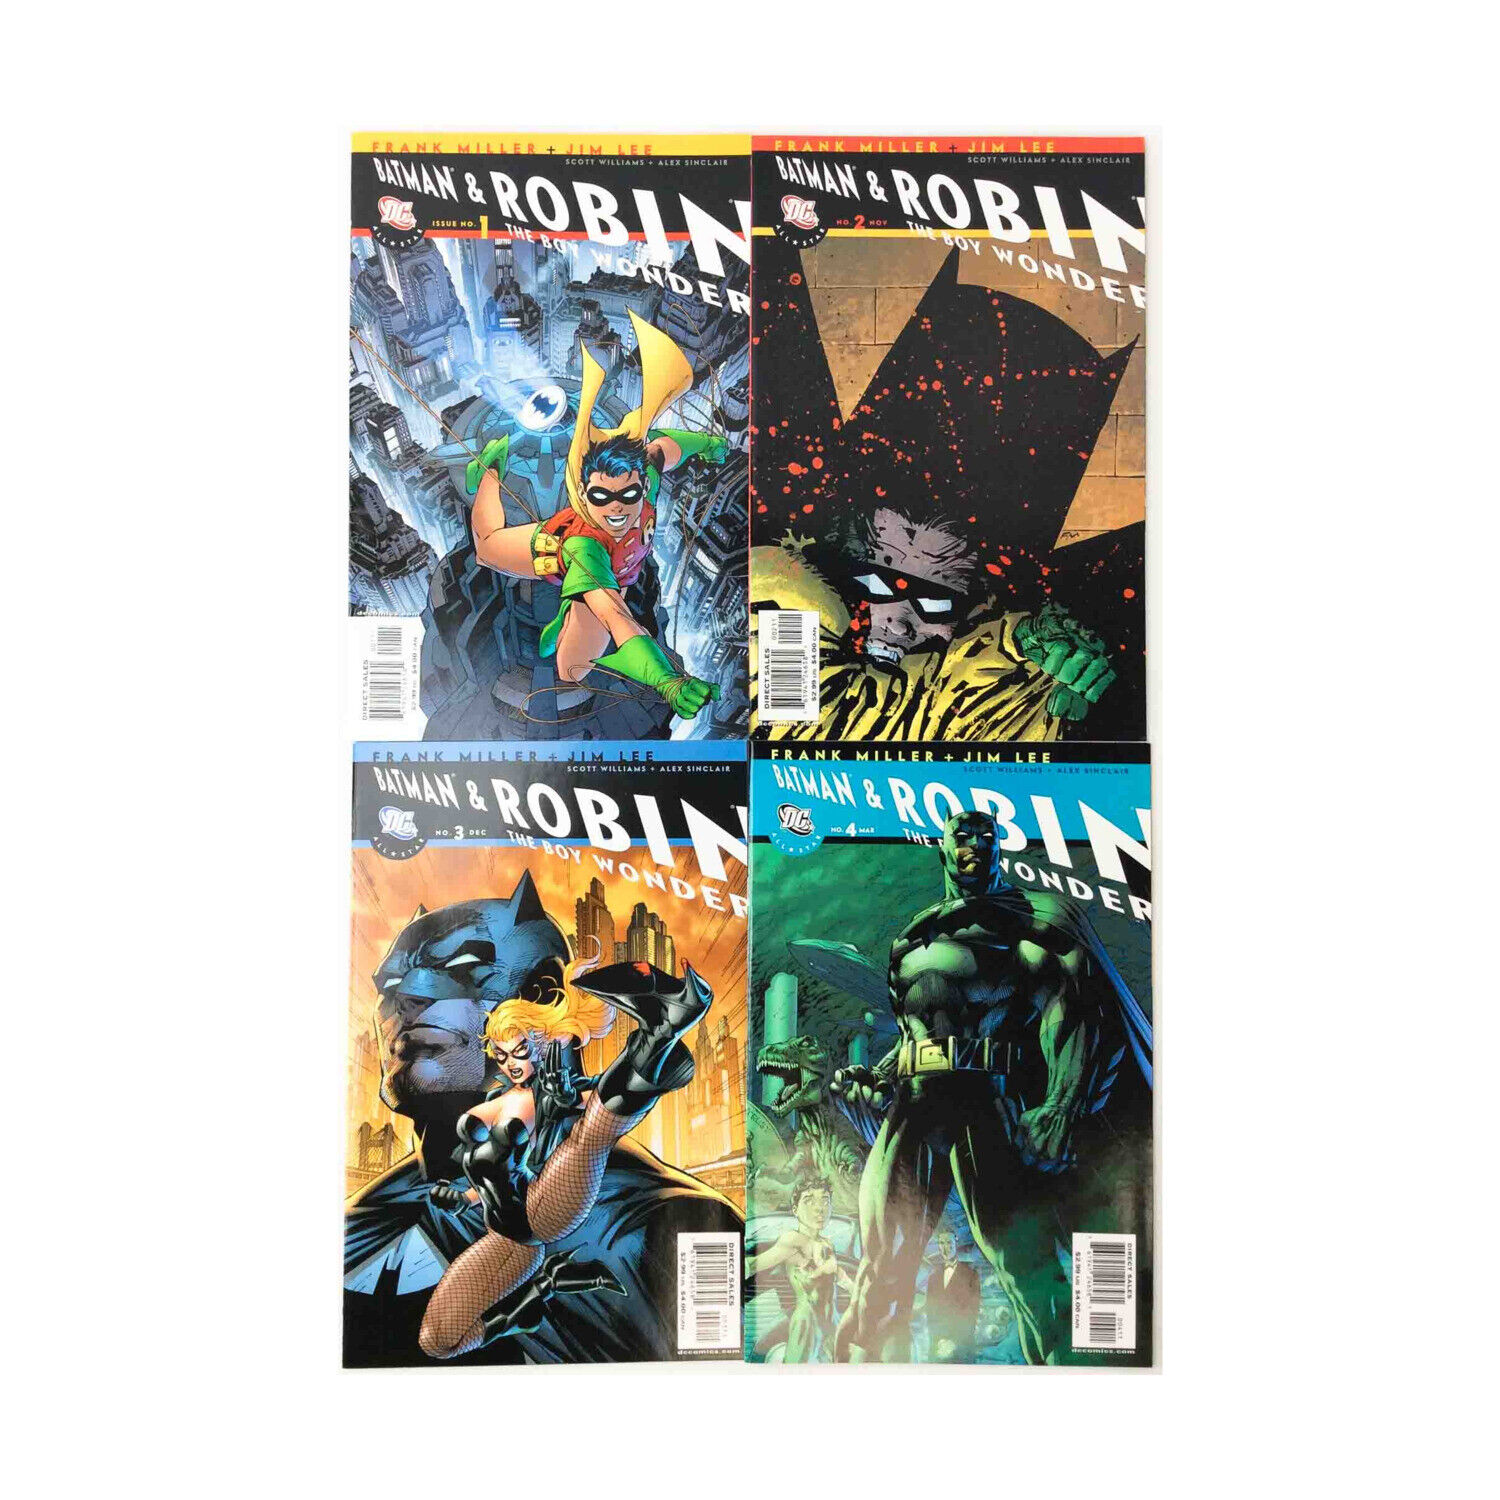 DC Novels & Comics Batman and Robin the Boy Wonder Collection - Issues #1-4 EX